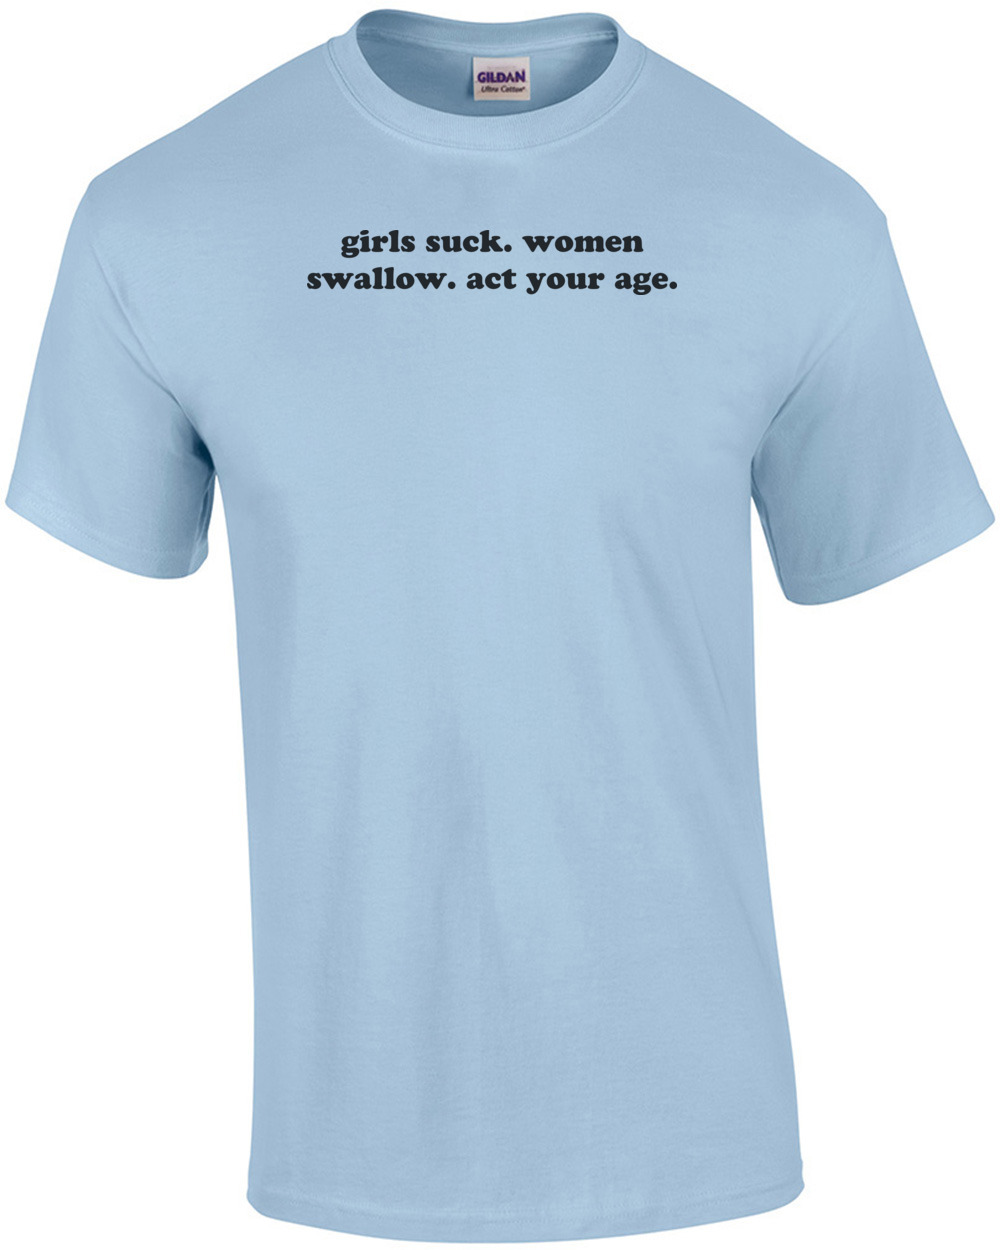 Girls Suck. Women Swallow. Act Your Age. Shirt | eBay